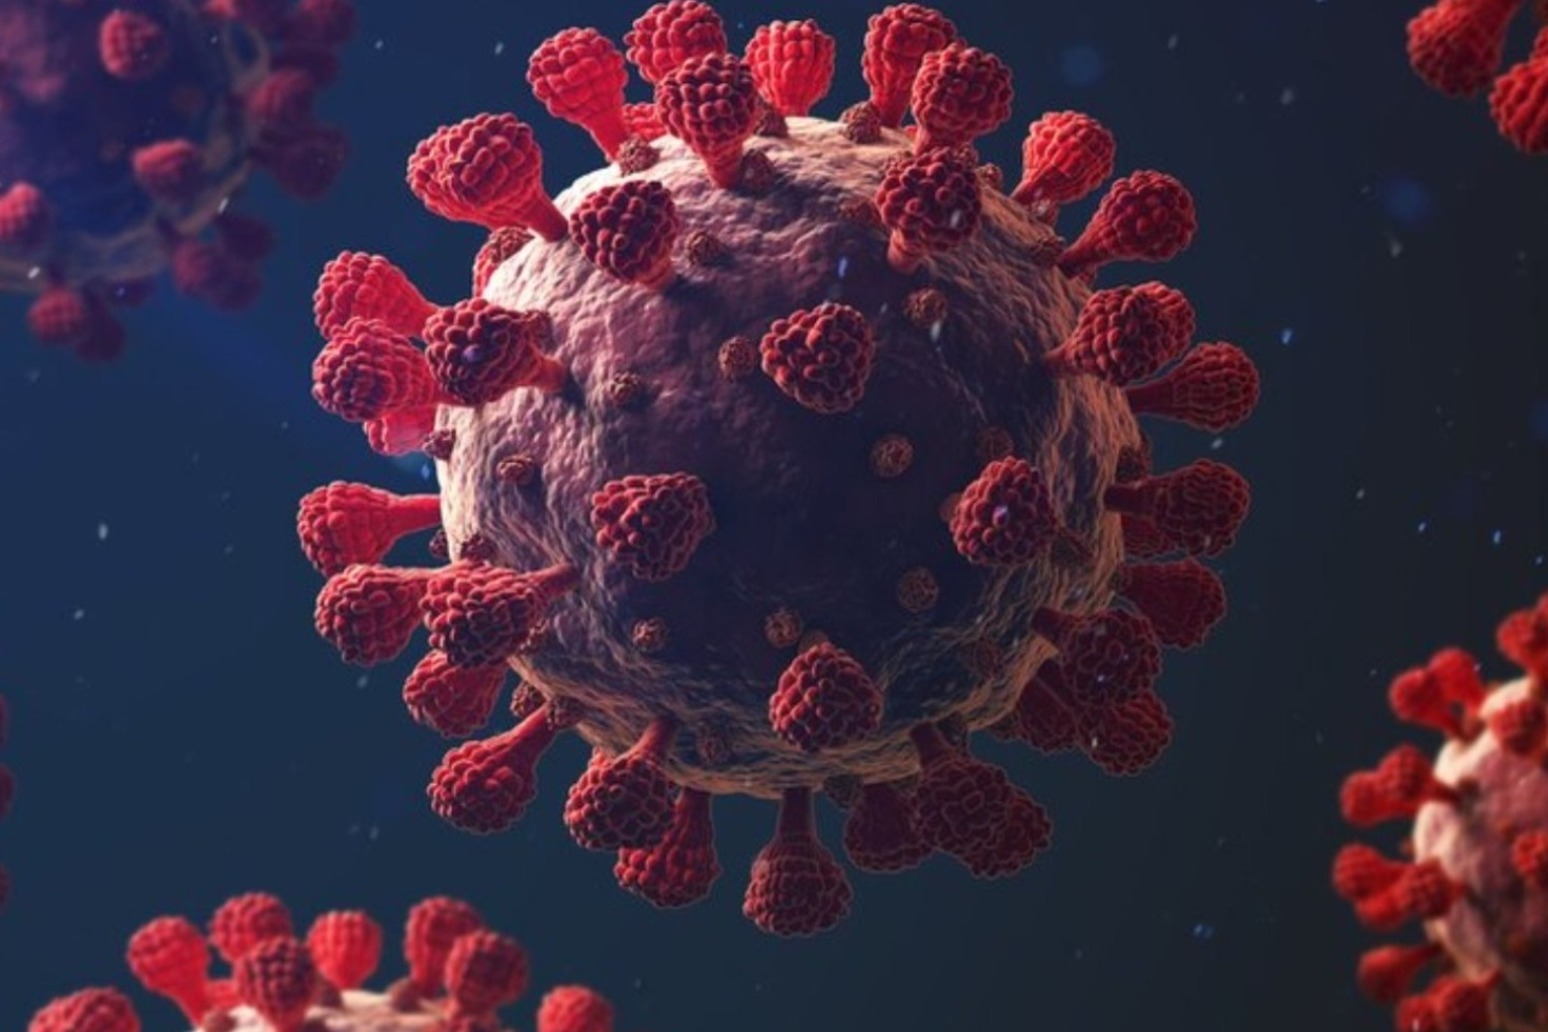 US approaches coronavirus death toll of 500,000 